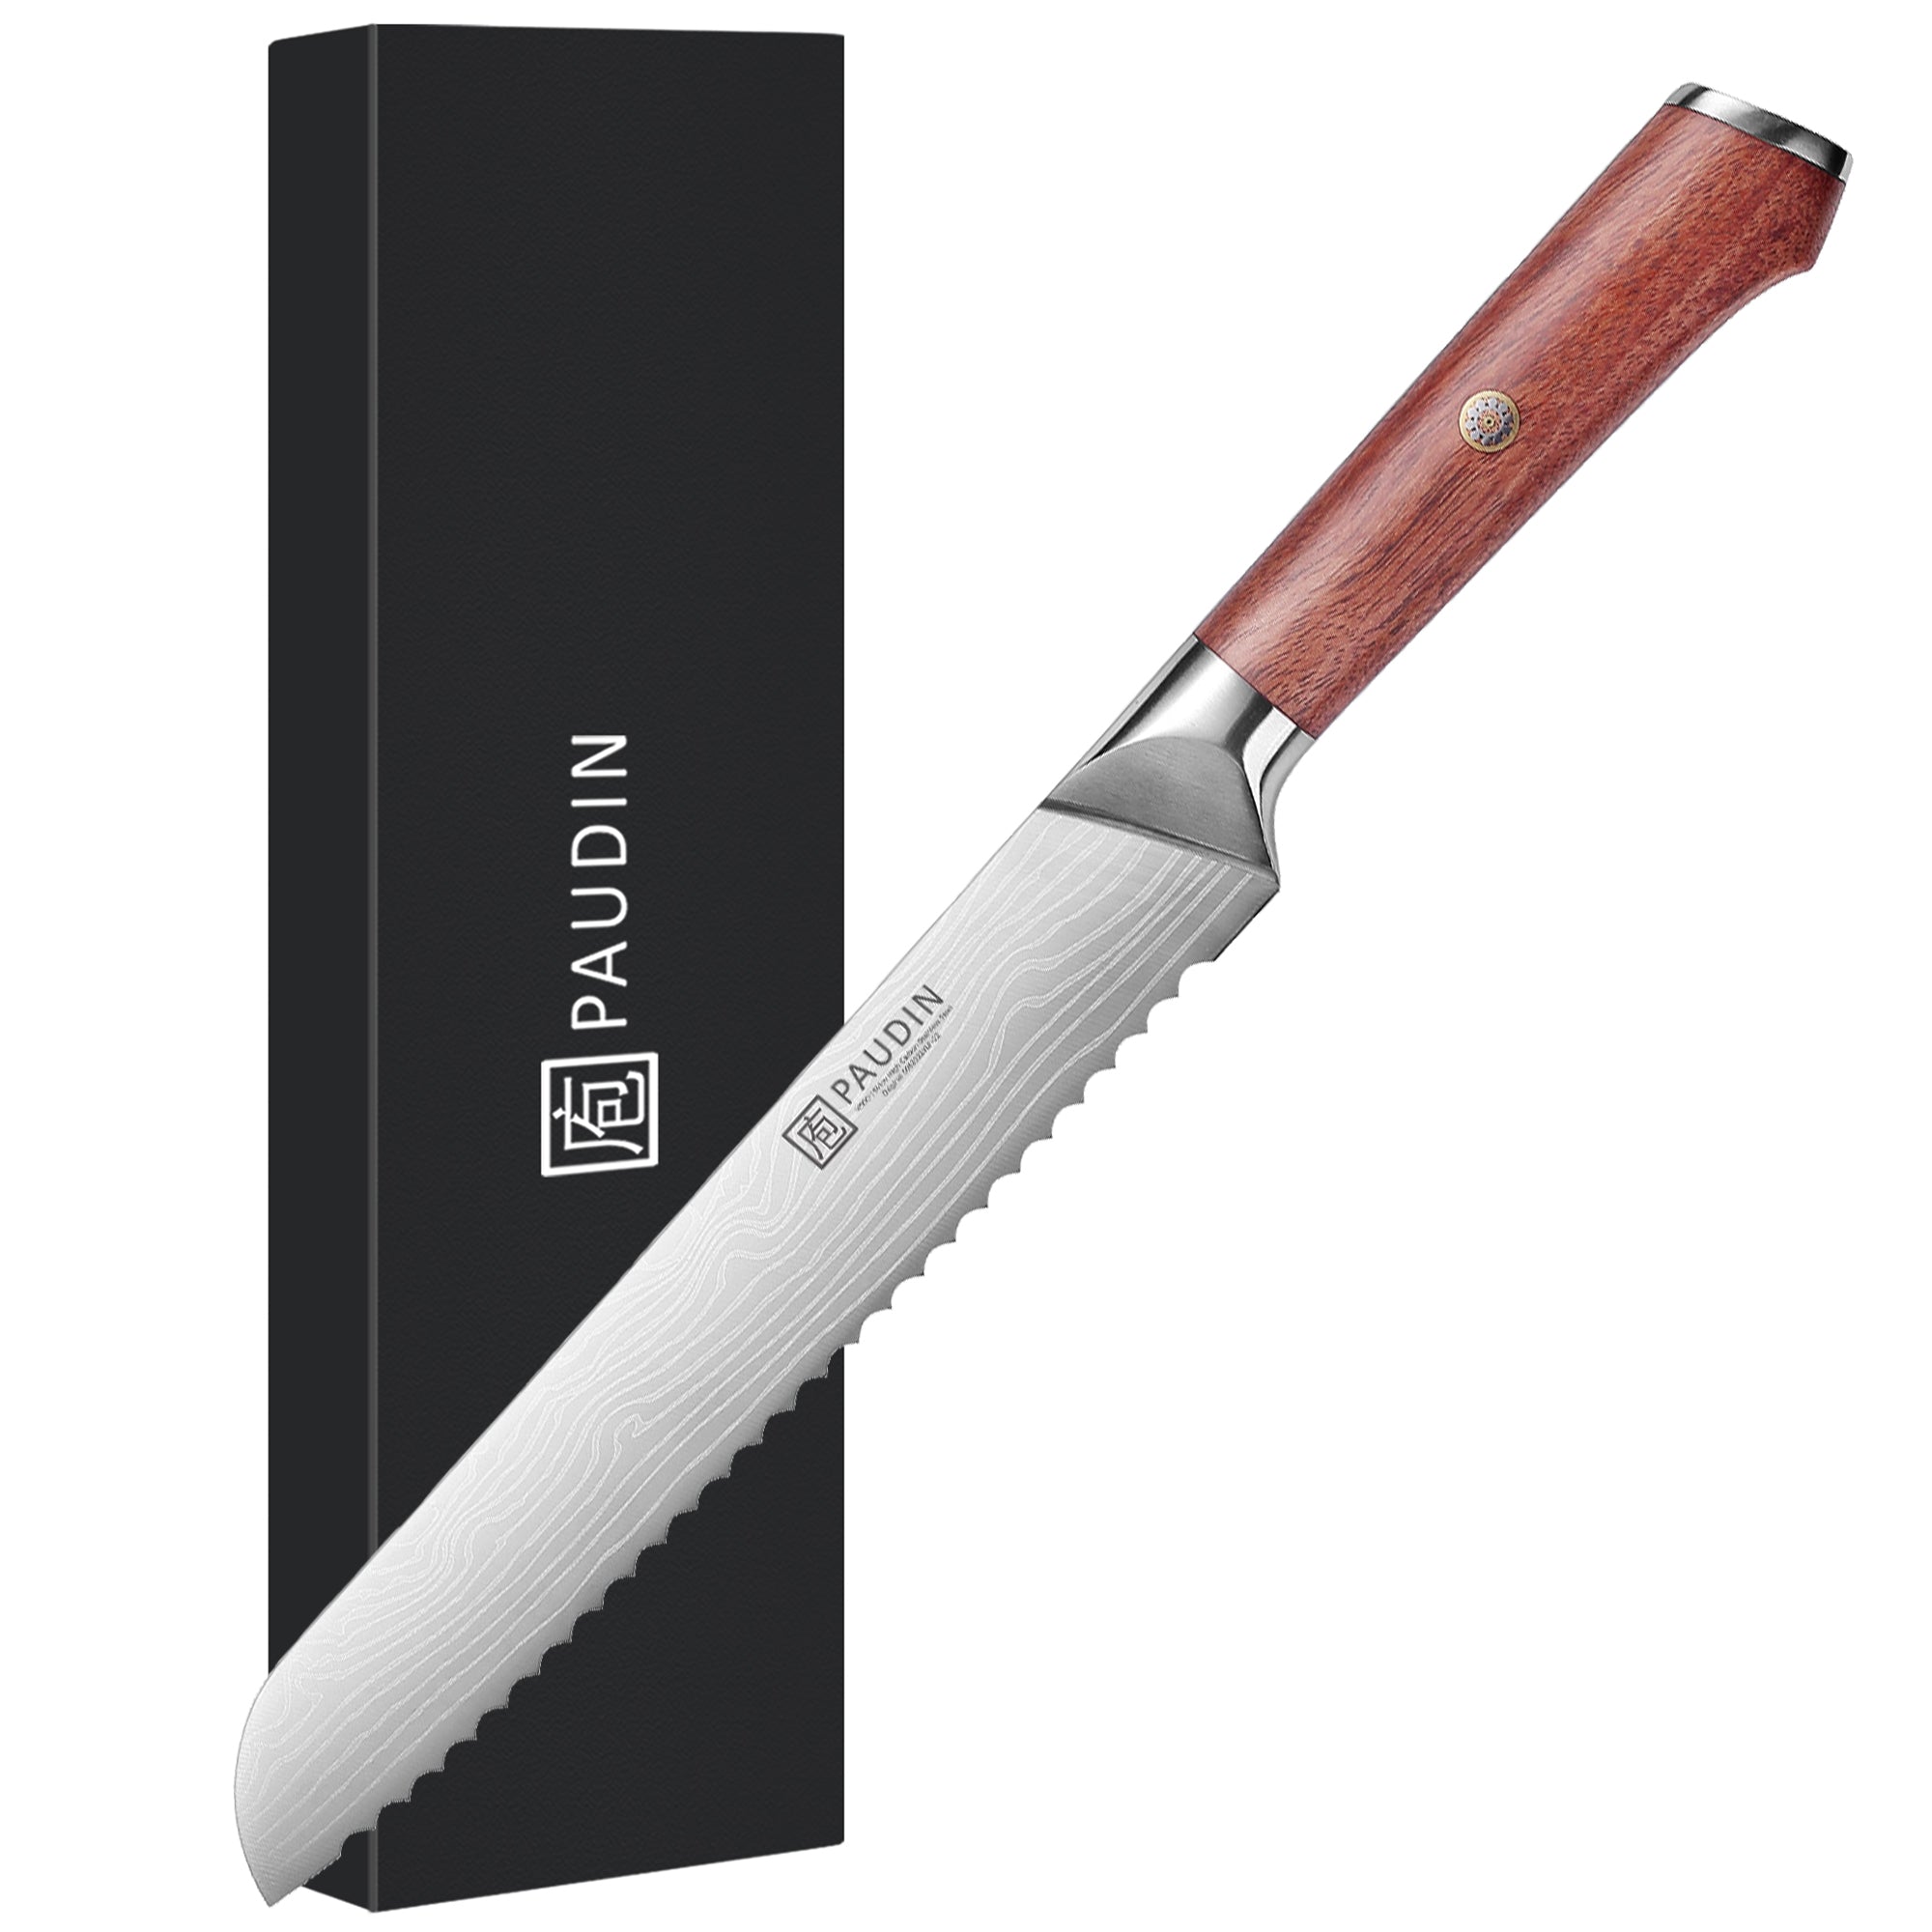 PAUDIN Steak Knives 4.5 Inch, Steak knives Set of 8